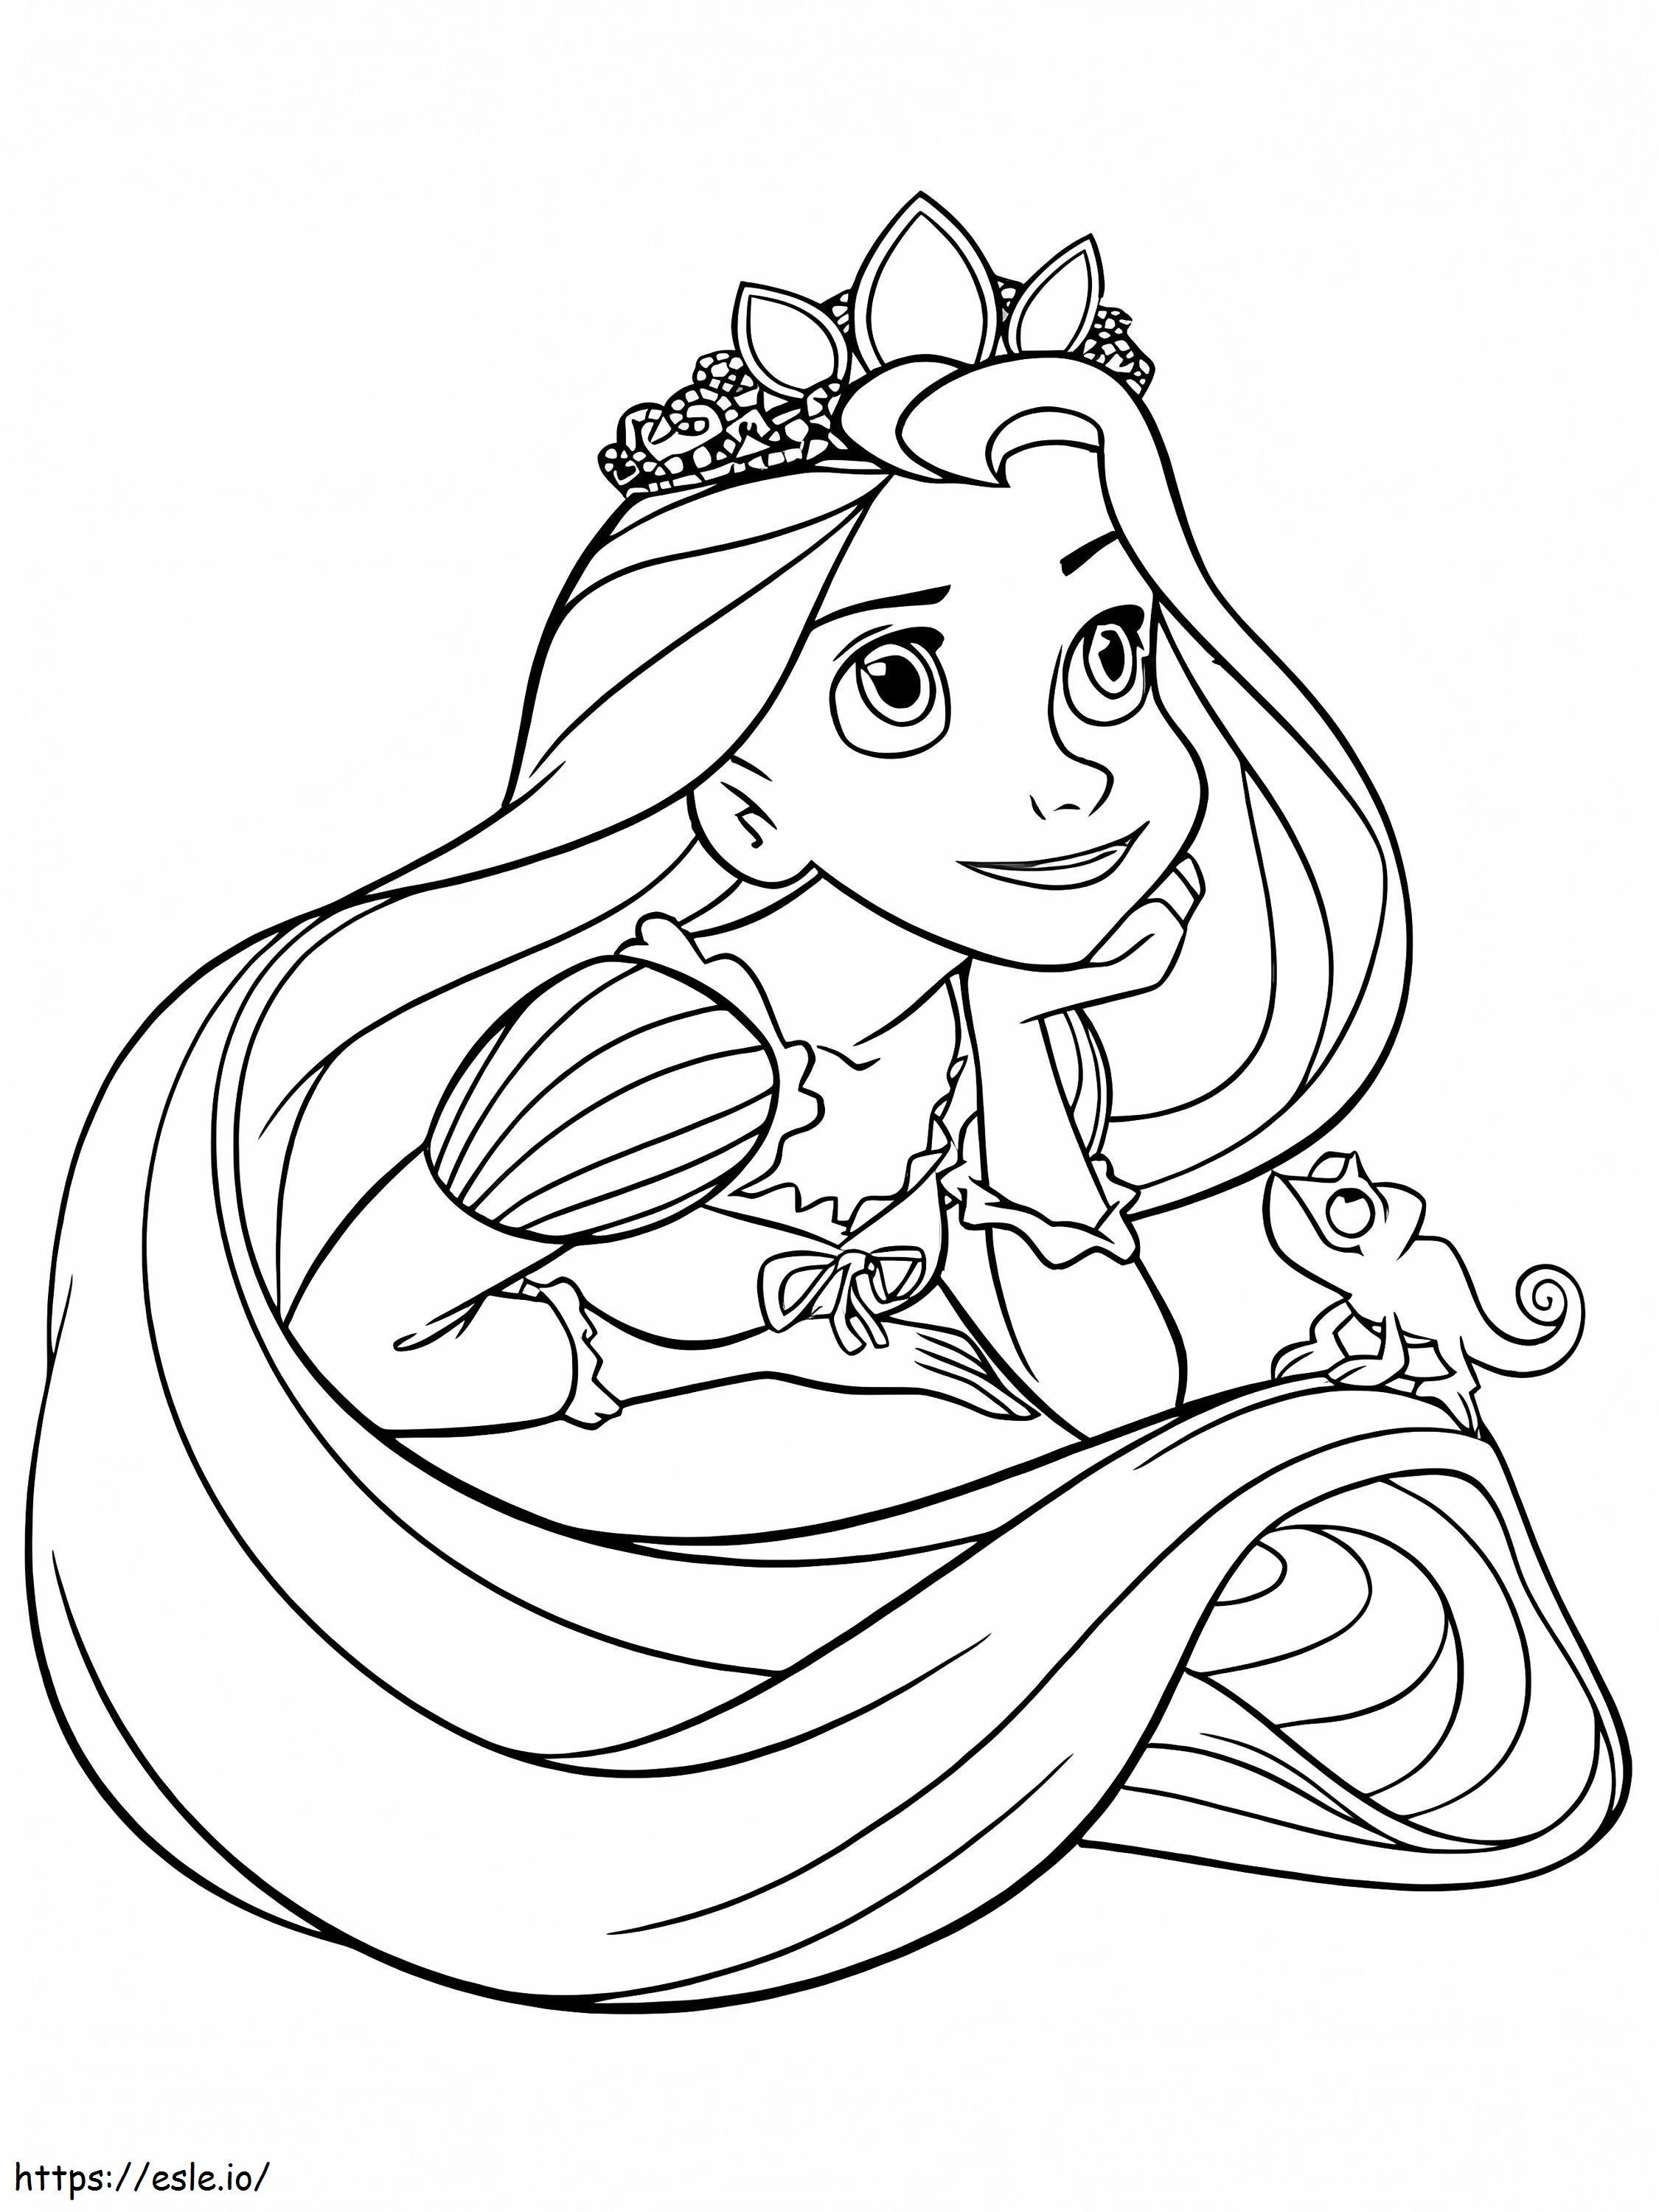 Retrato de Rapunzel com lagartixa para colorir